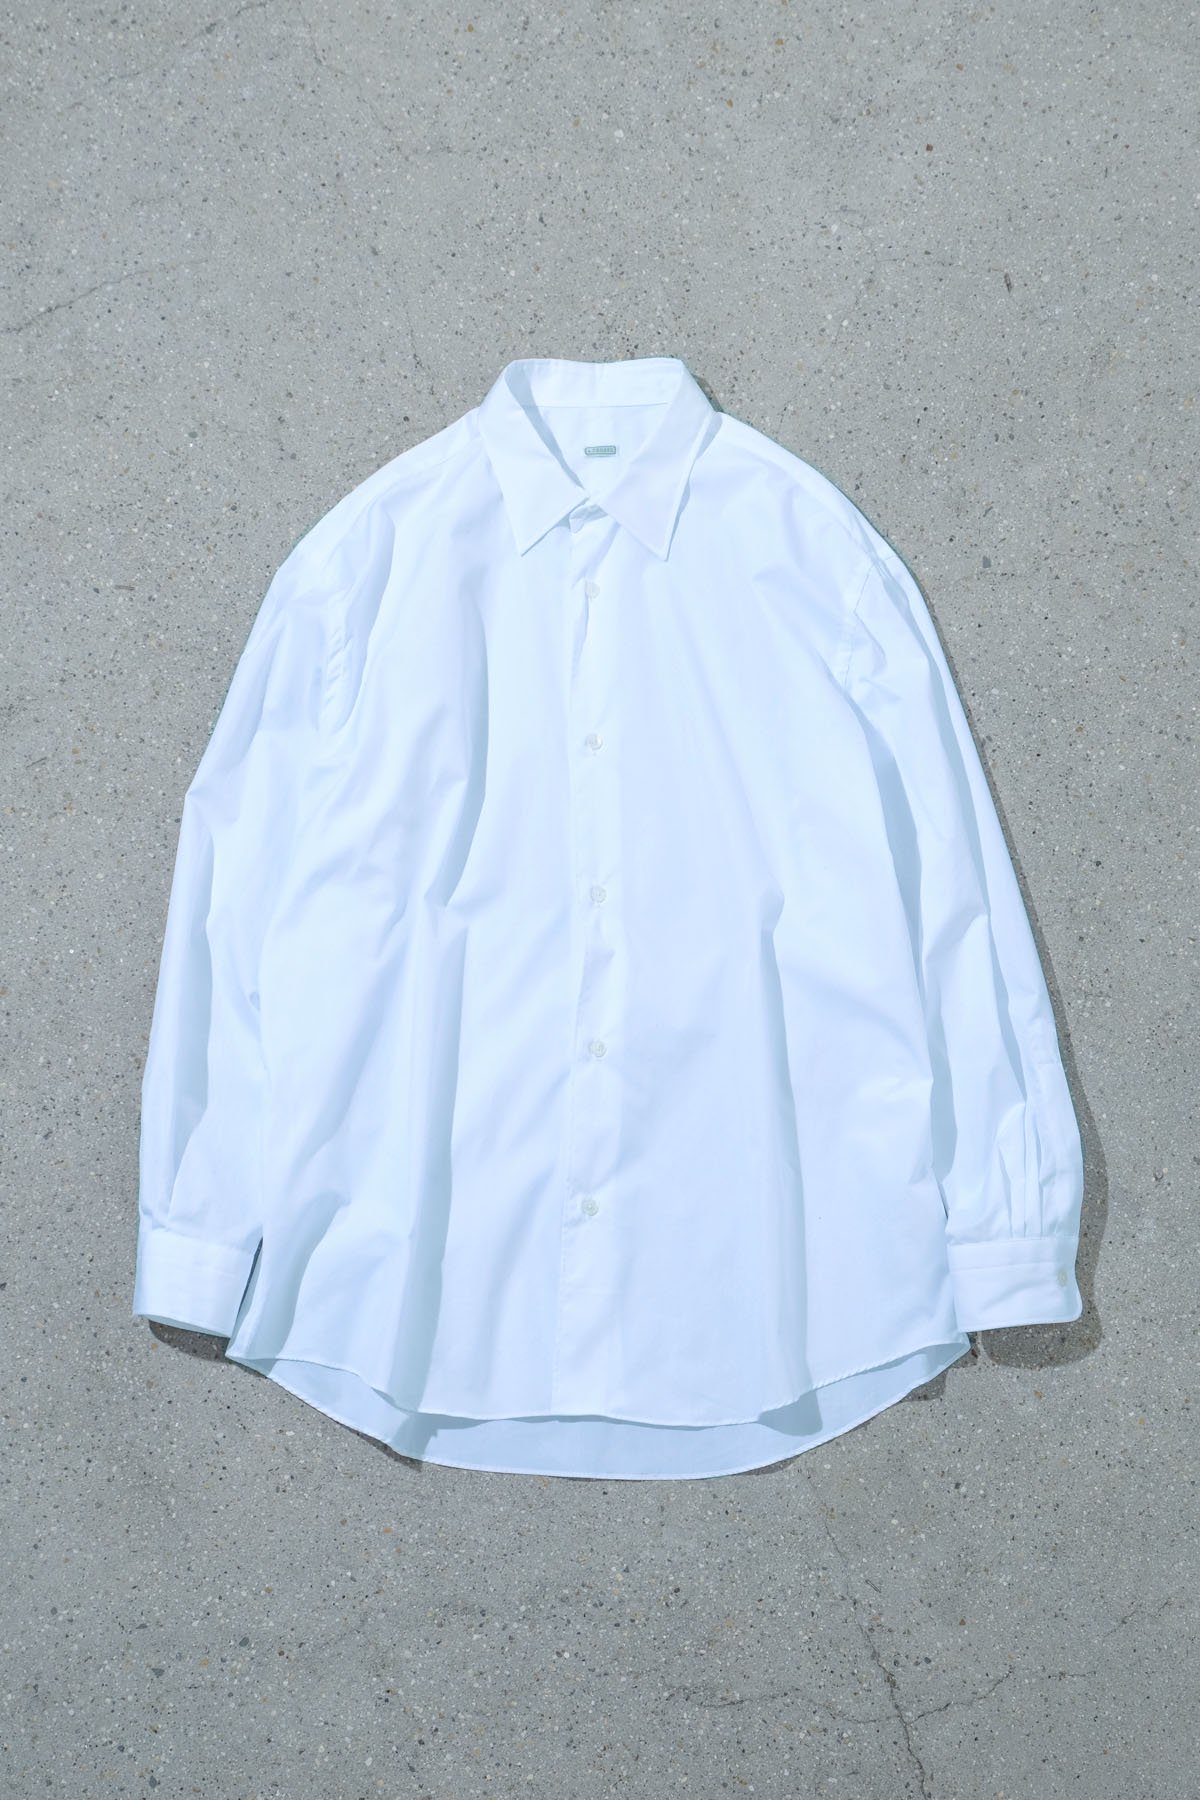 A.PRESSE / Regular Collar Shirt